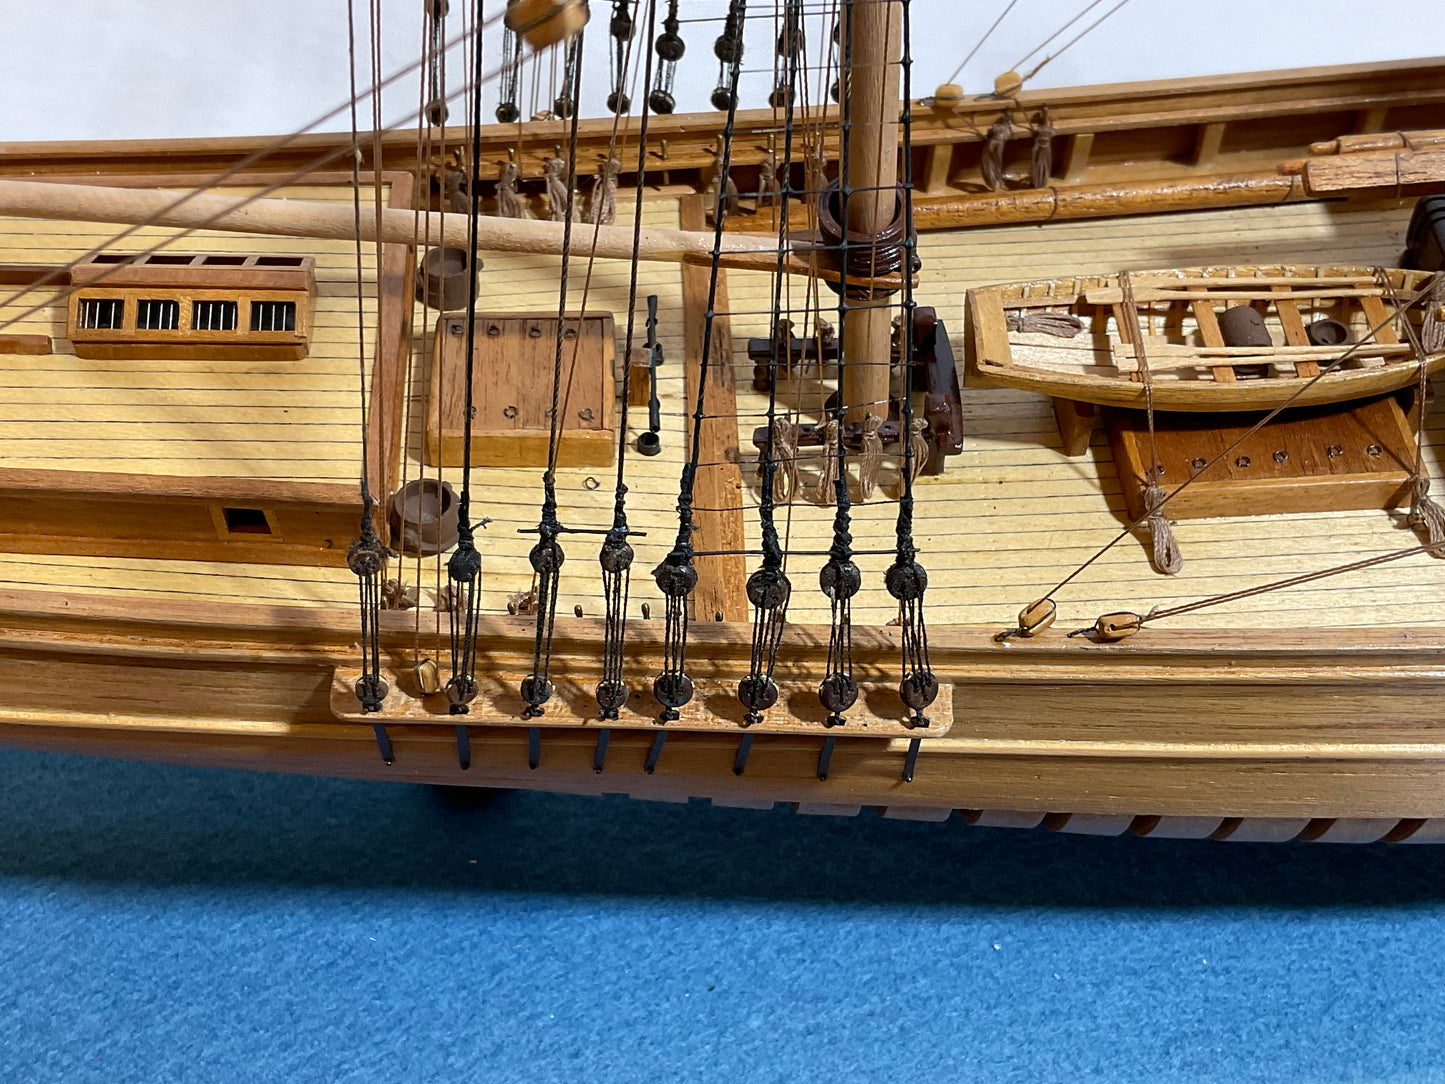 Ship model of Brig Pilgrim by Hitchcock